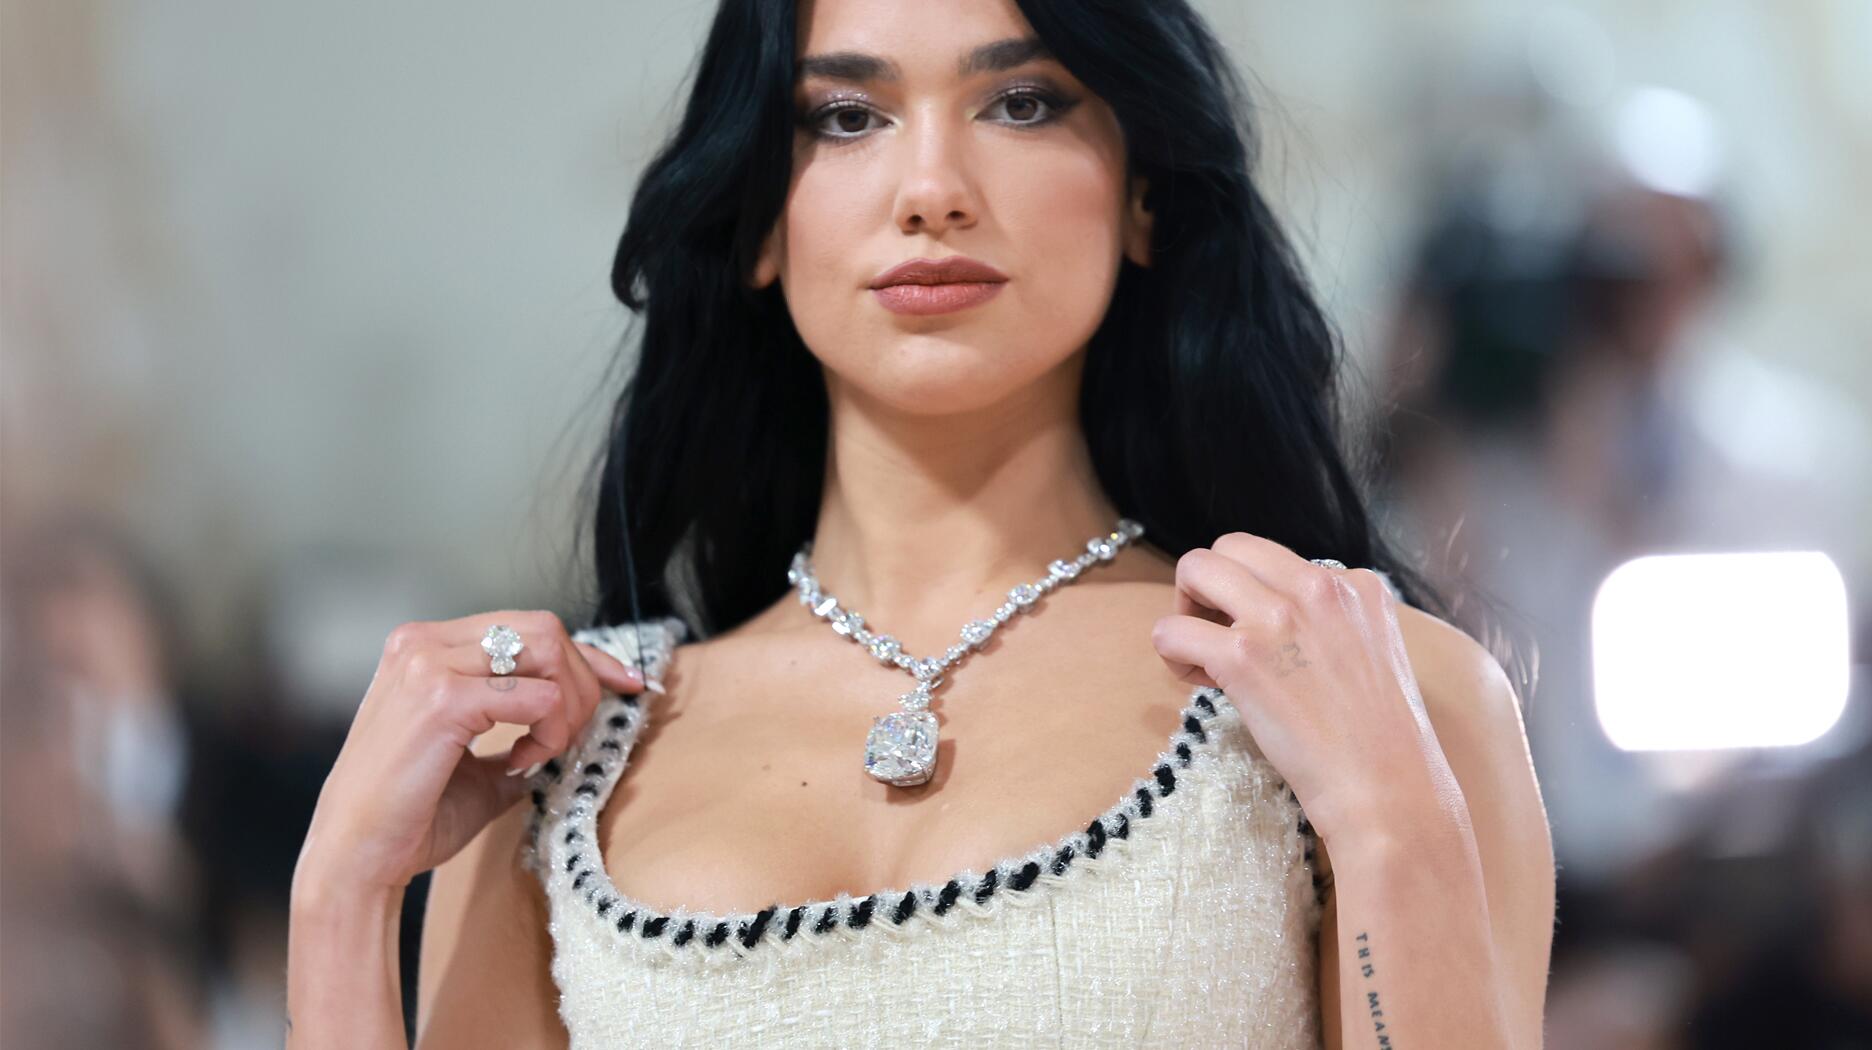 Dua lipa with a diamond necklace